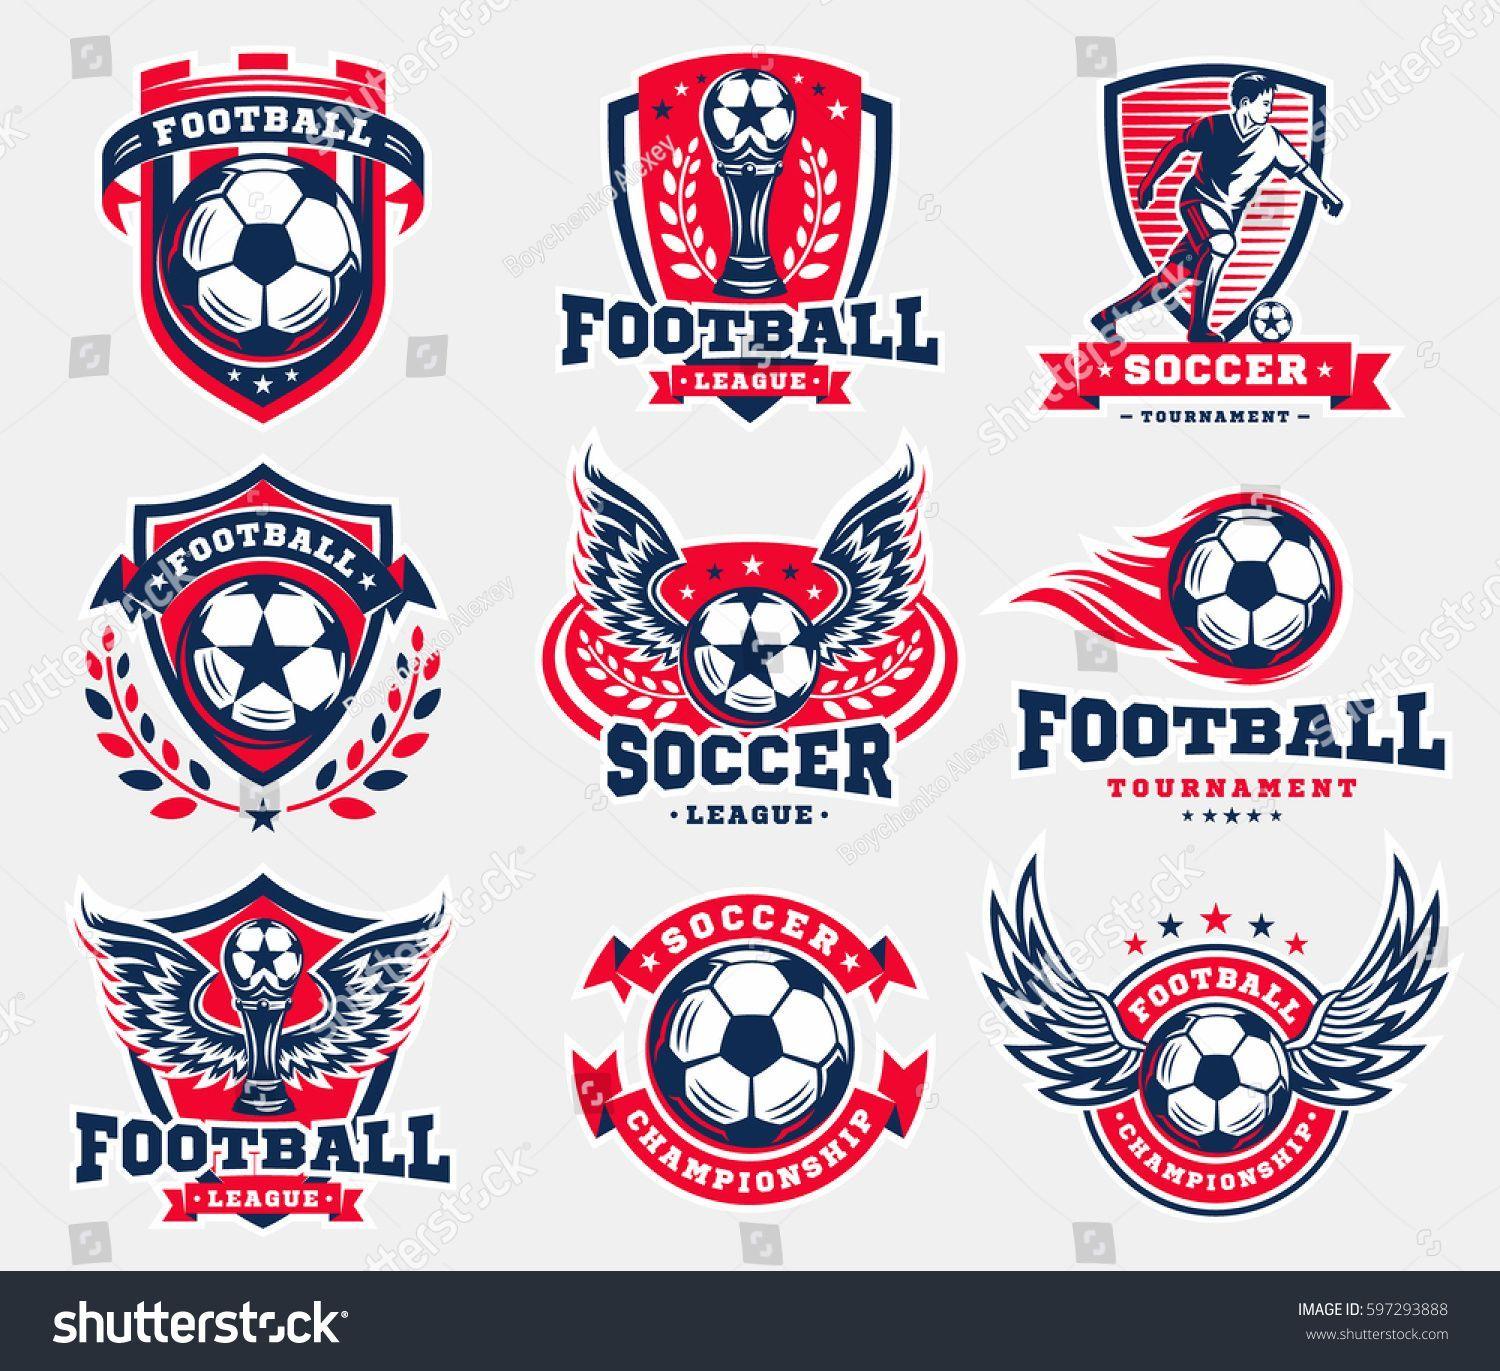 Football Logo - Soccer football logo, emblem collections, designs templates on a ...